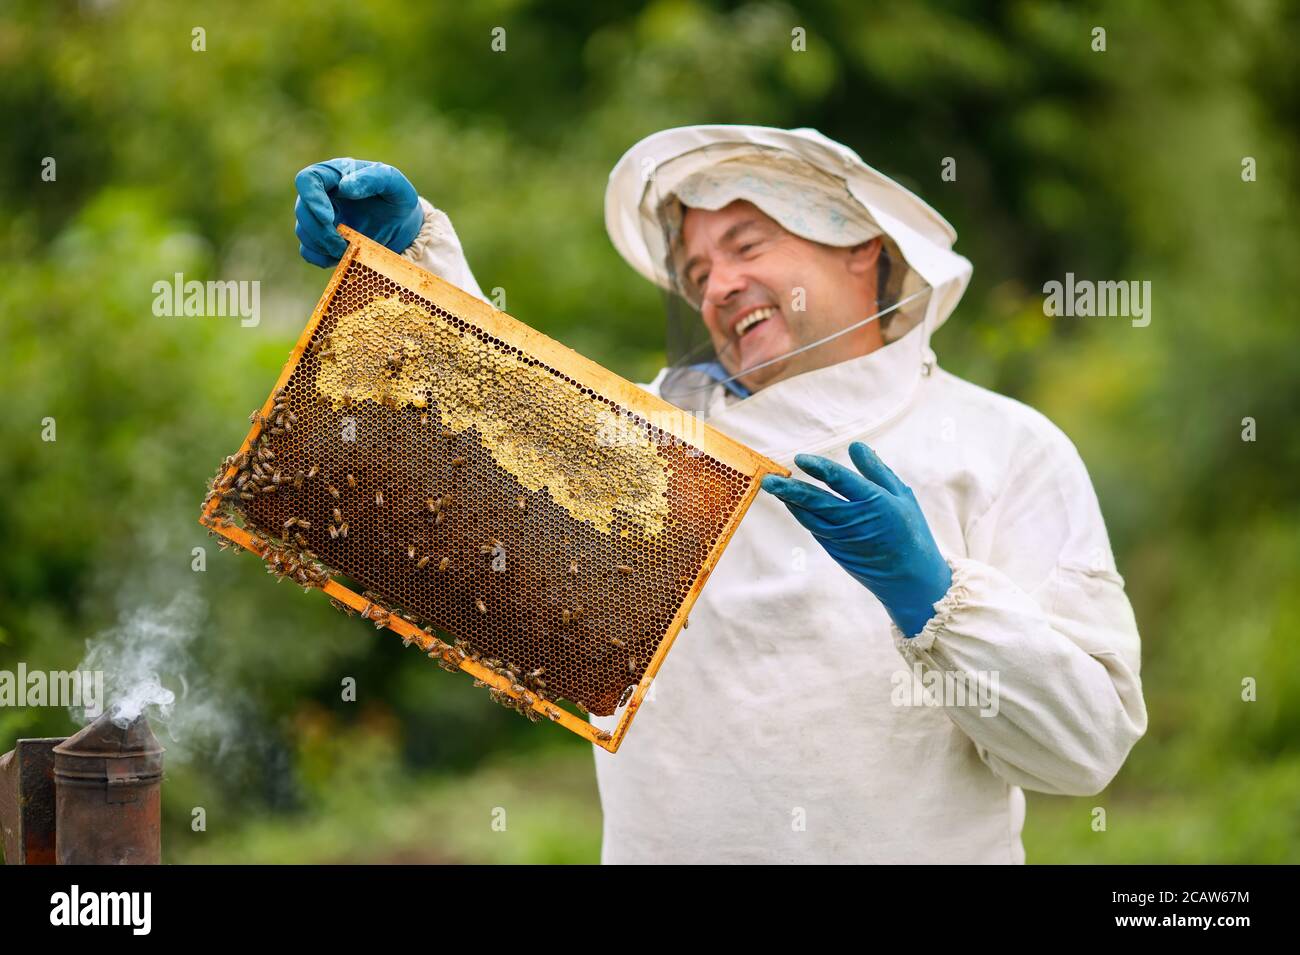 Beekeeper at apiary Stock Photo